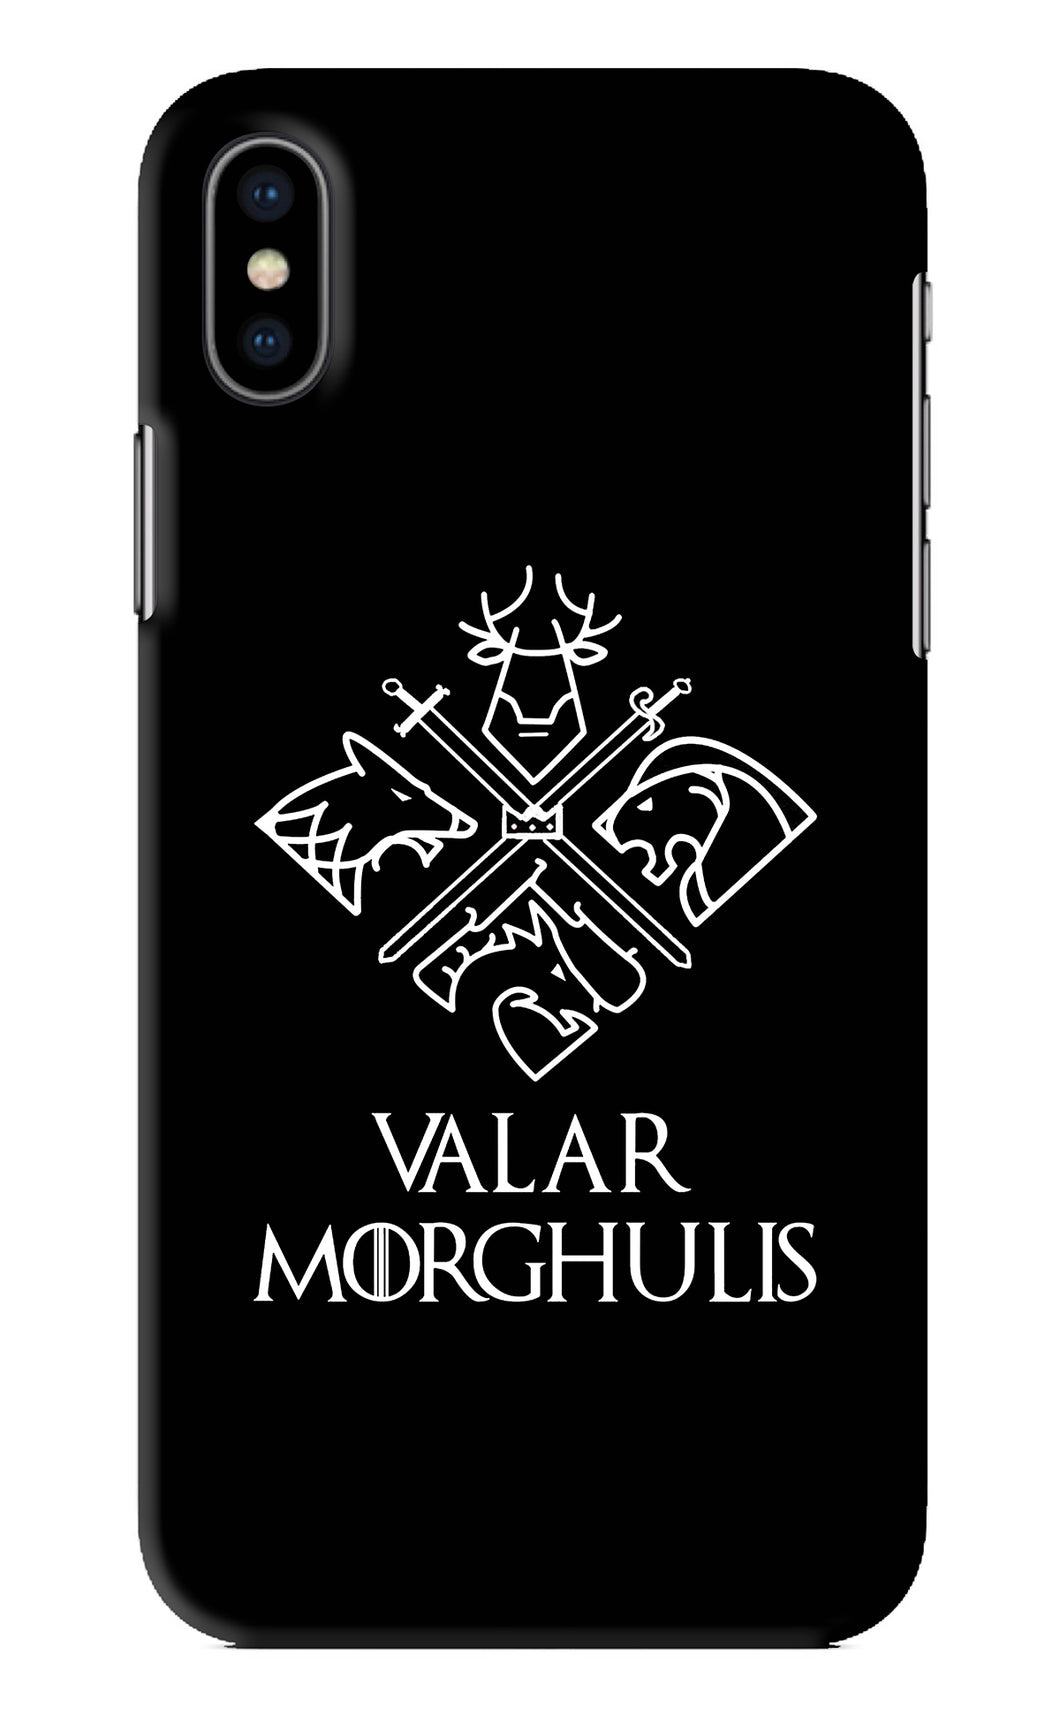 Valar Morghulis | Game Of Thrones iPhone X Back Skin Wrap